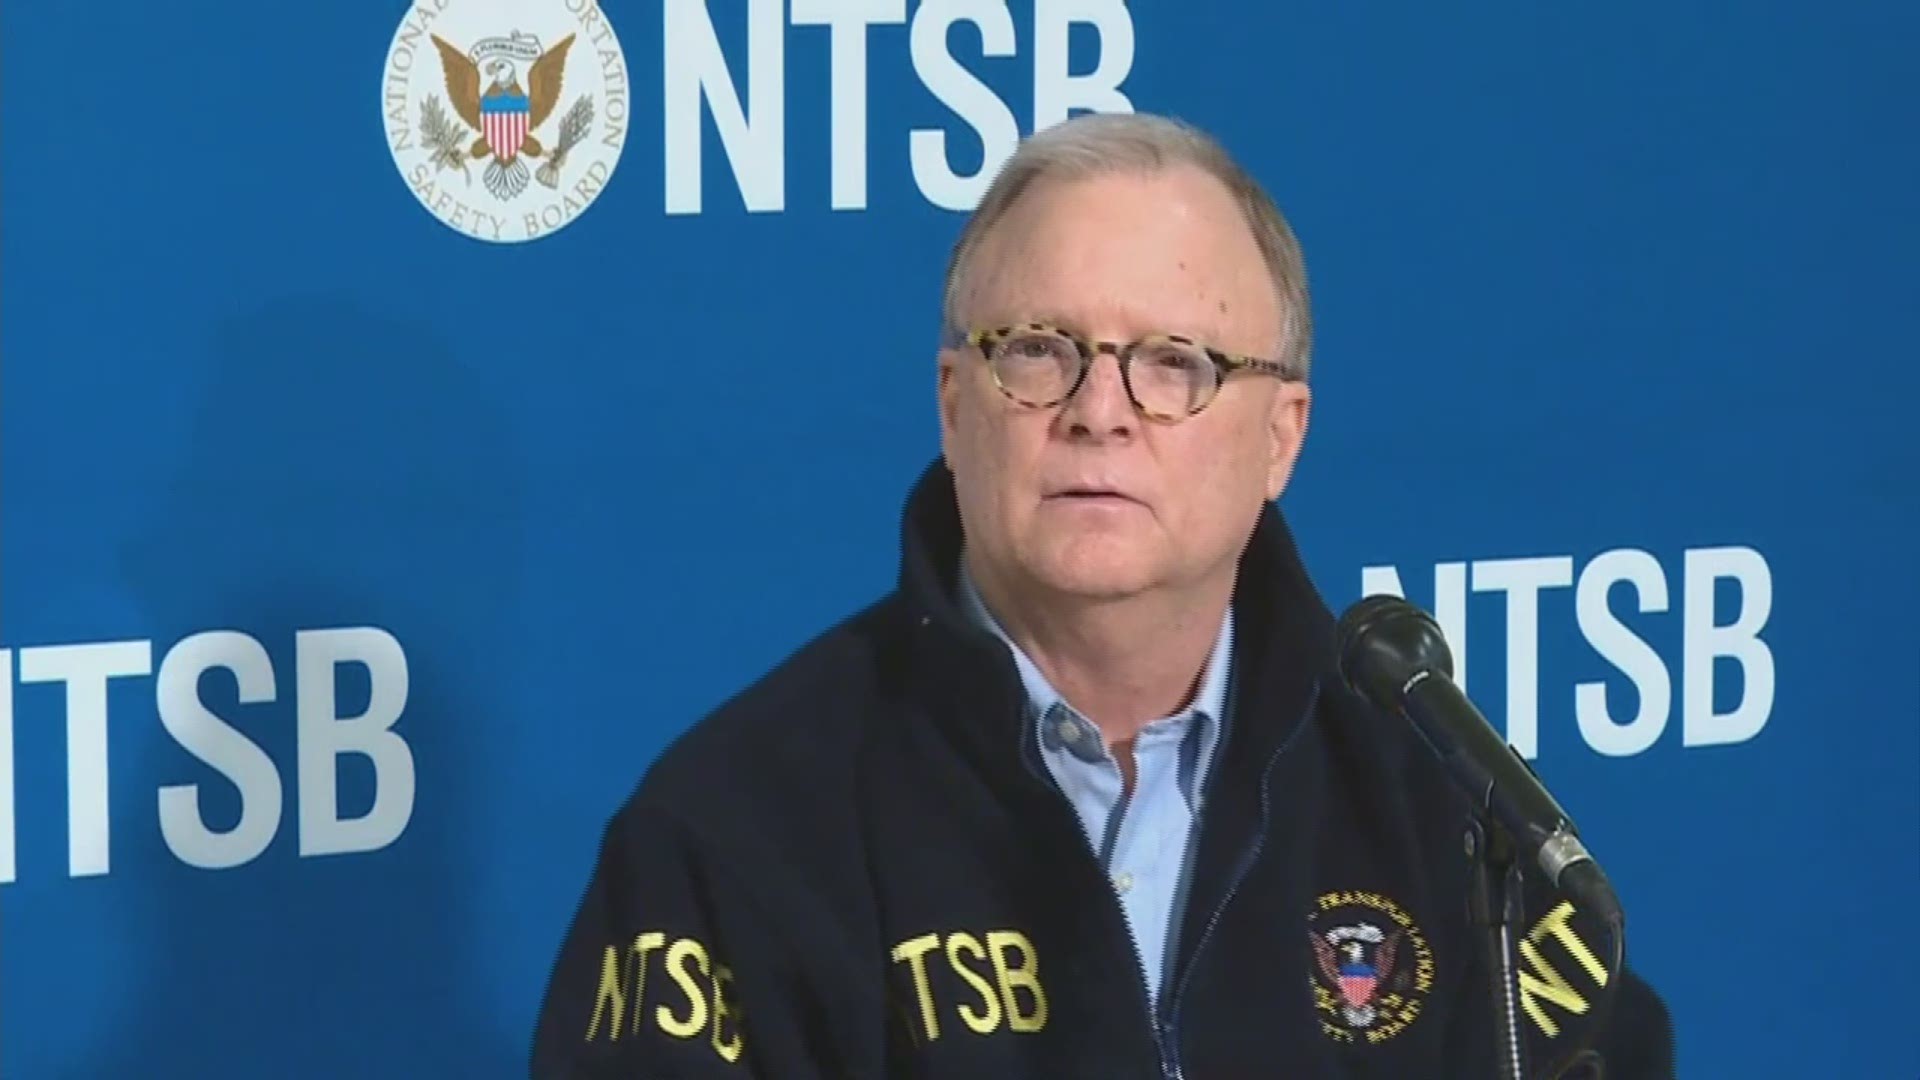 NTSB Chairman Robert Sumwalt provides an update on the catastrophic engine failure on Southwest Flight 1380. WFAA.com